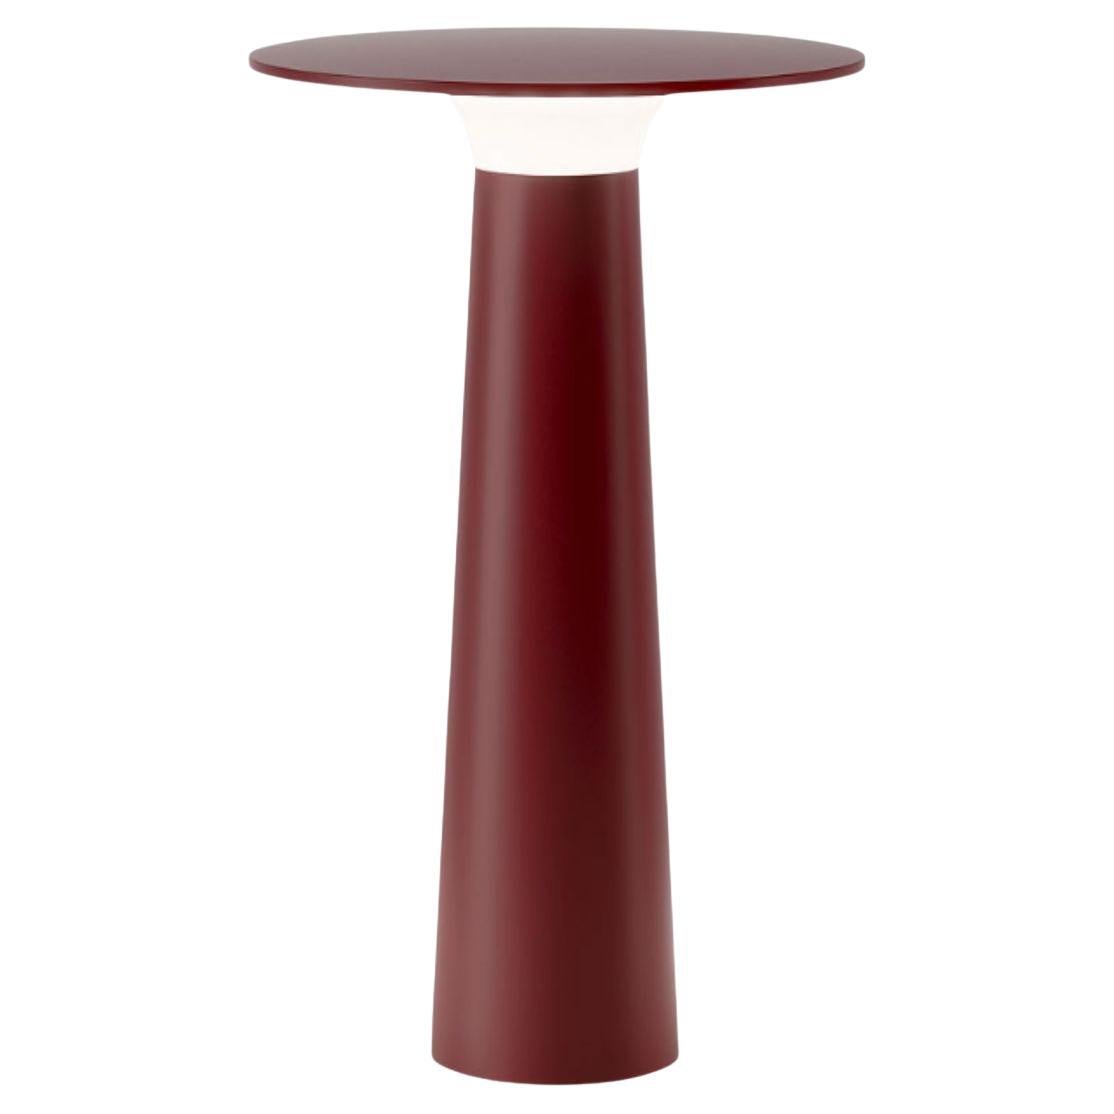 Klaus Nolting 'Lix' Portable Outdoor Aluminum Table Lamp in Sage for IP44de For Sale 4